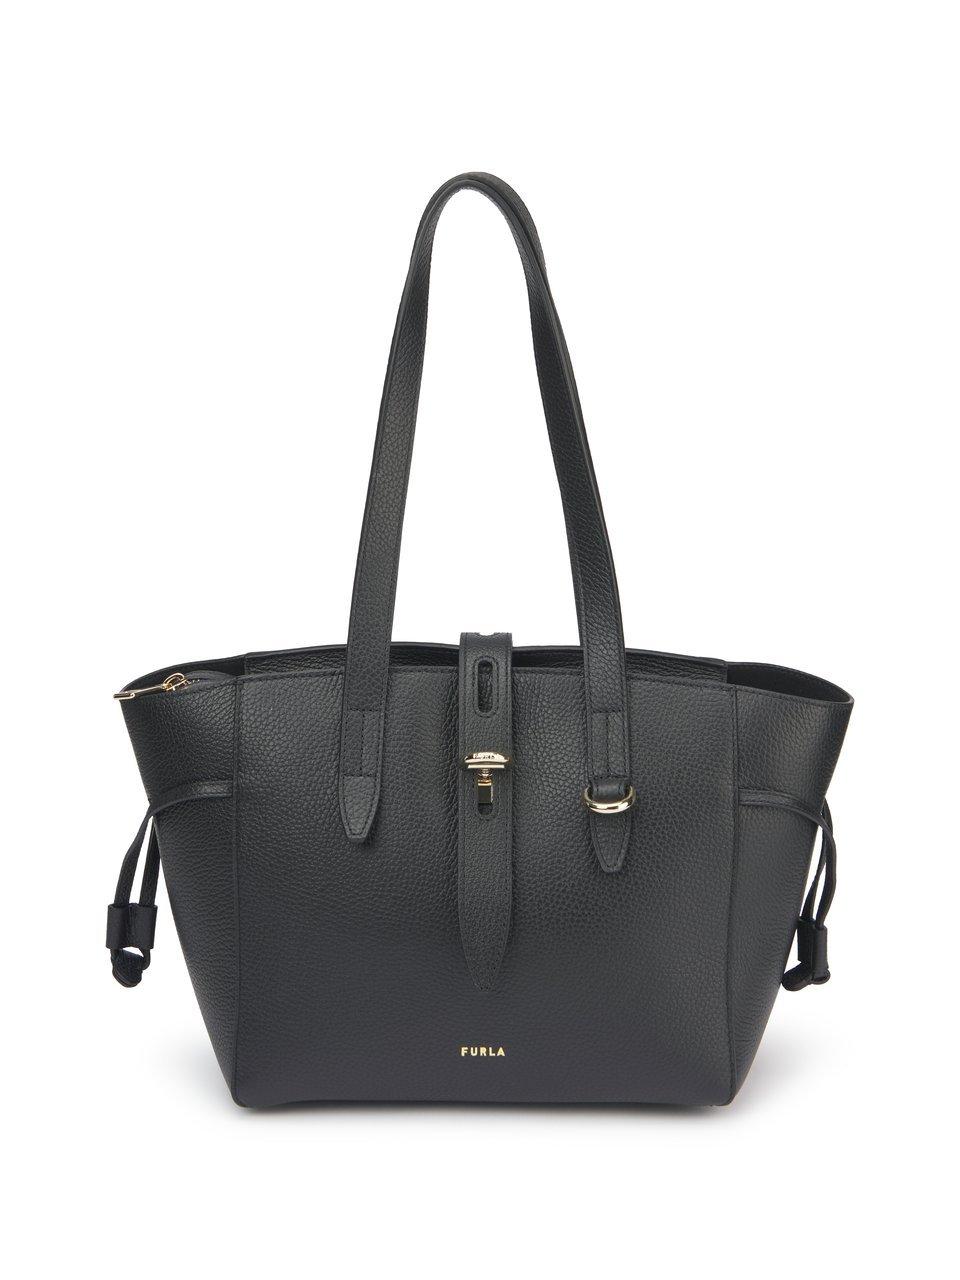 Image of Shopper bag “Net S Tote 24“ Furla black